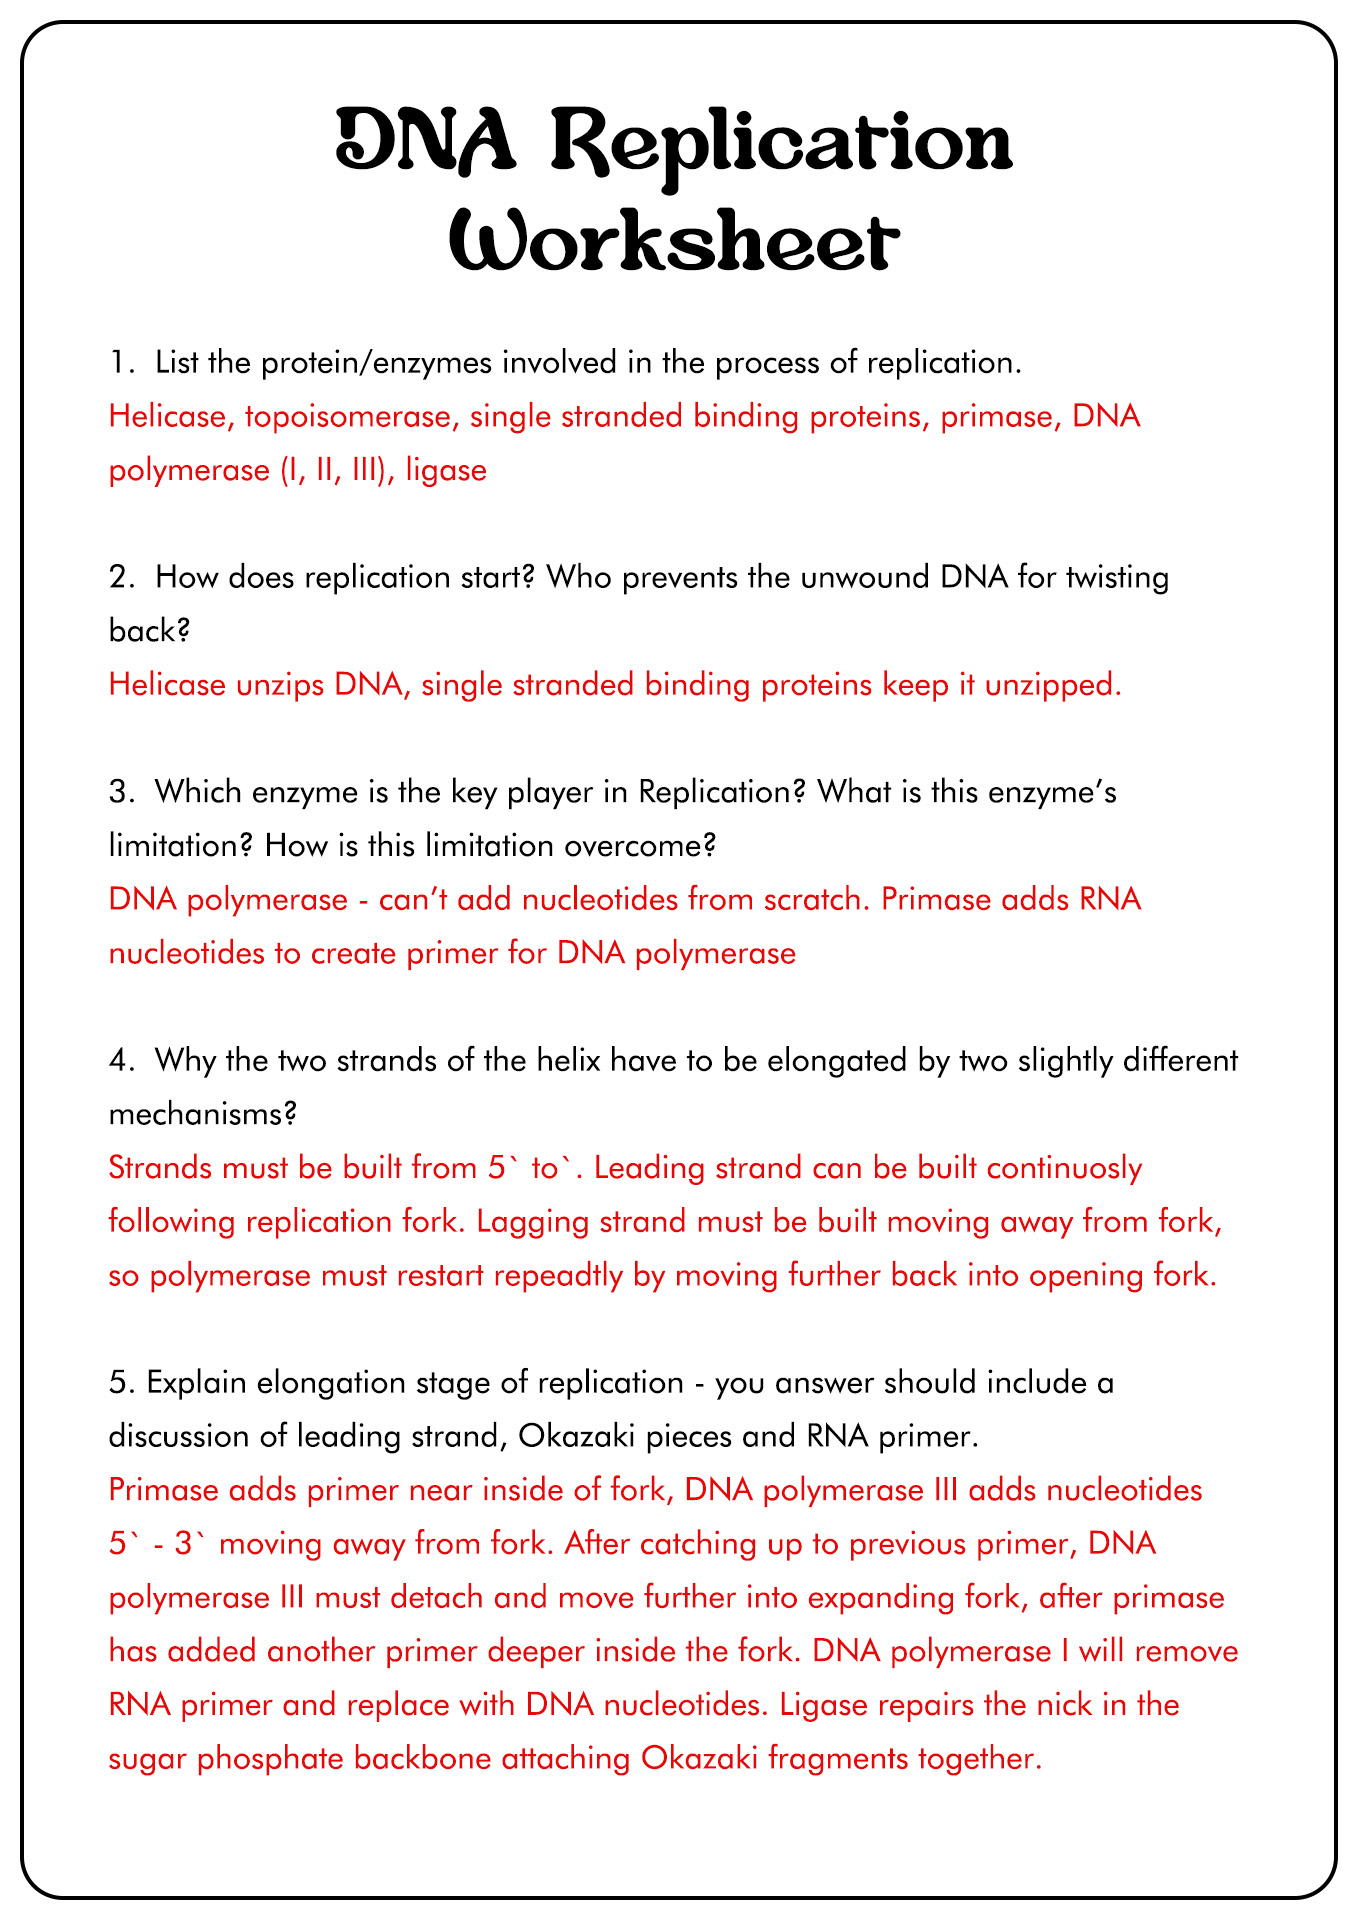 DNA Replication Worksheet Answer Key Image